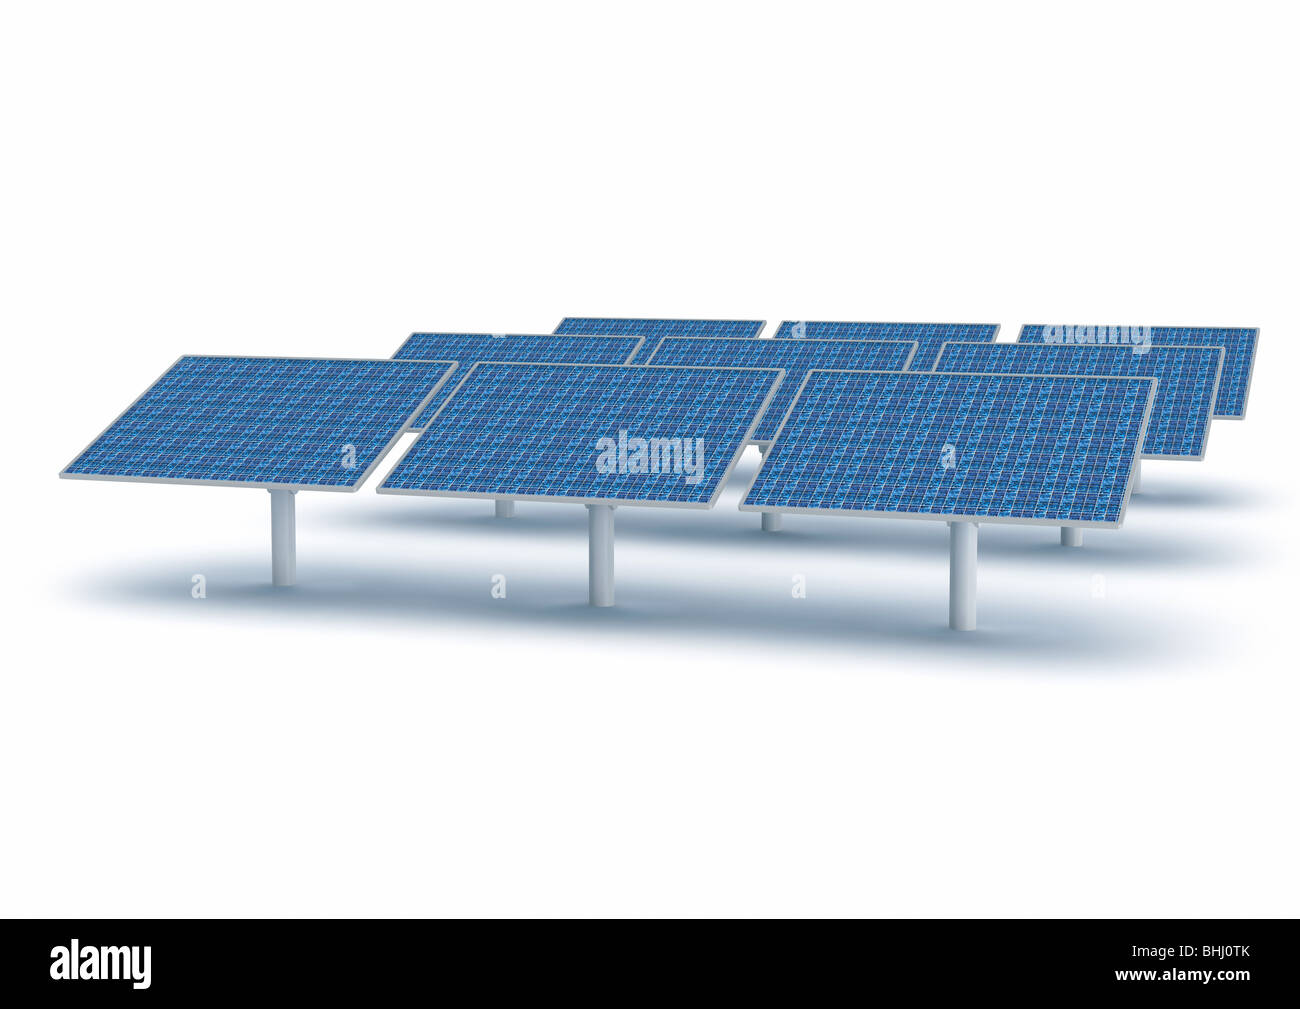 Solarkollektor Panels, Energie - Solarpaneele Sonnenkollektoren Solarenergie Stockfoto